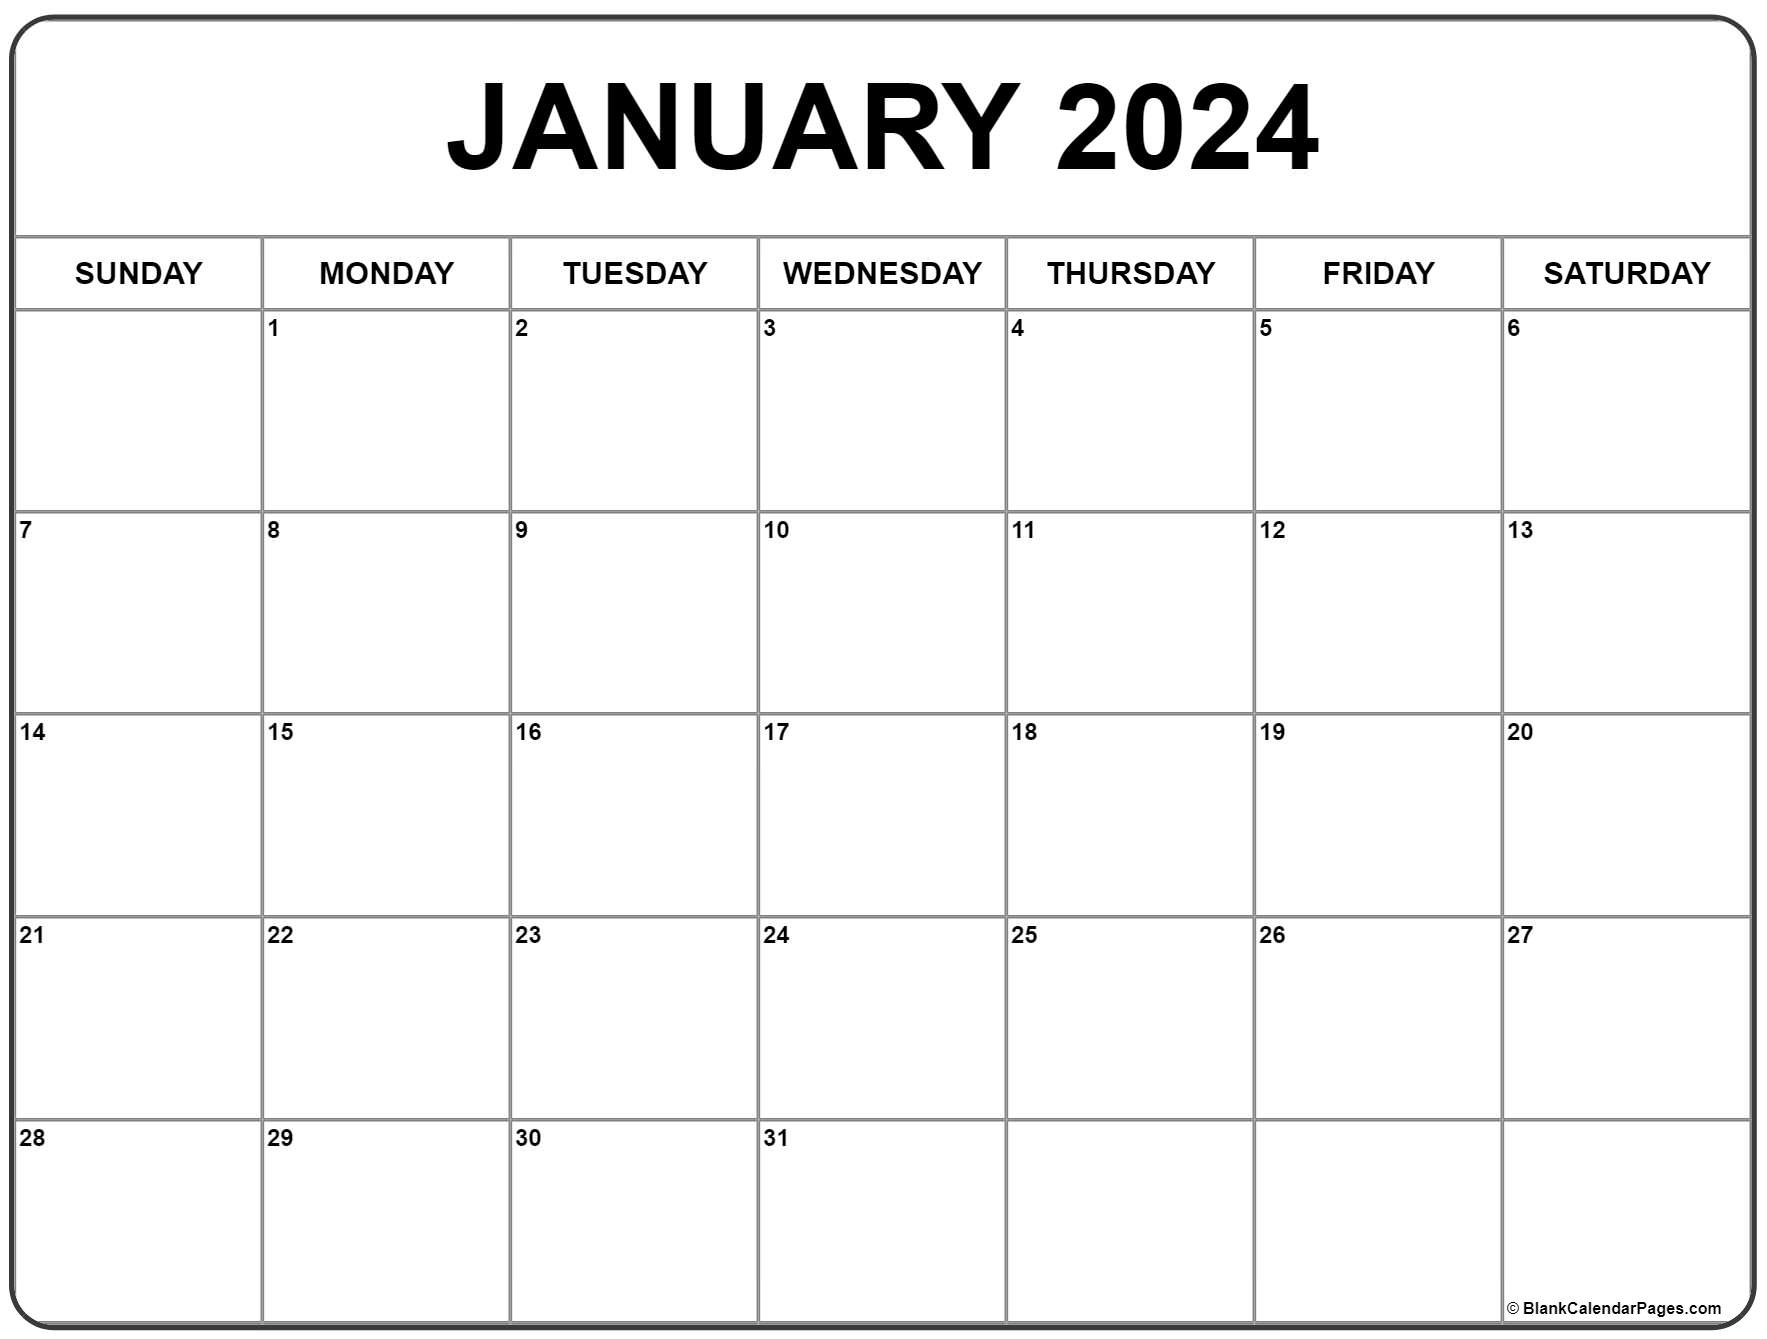 January 2024 Calendar | Free Printable Calendar for Free Printable January 2024 Monthly Calendar